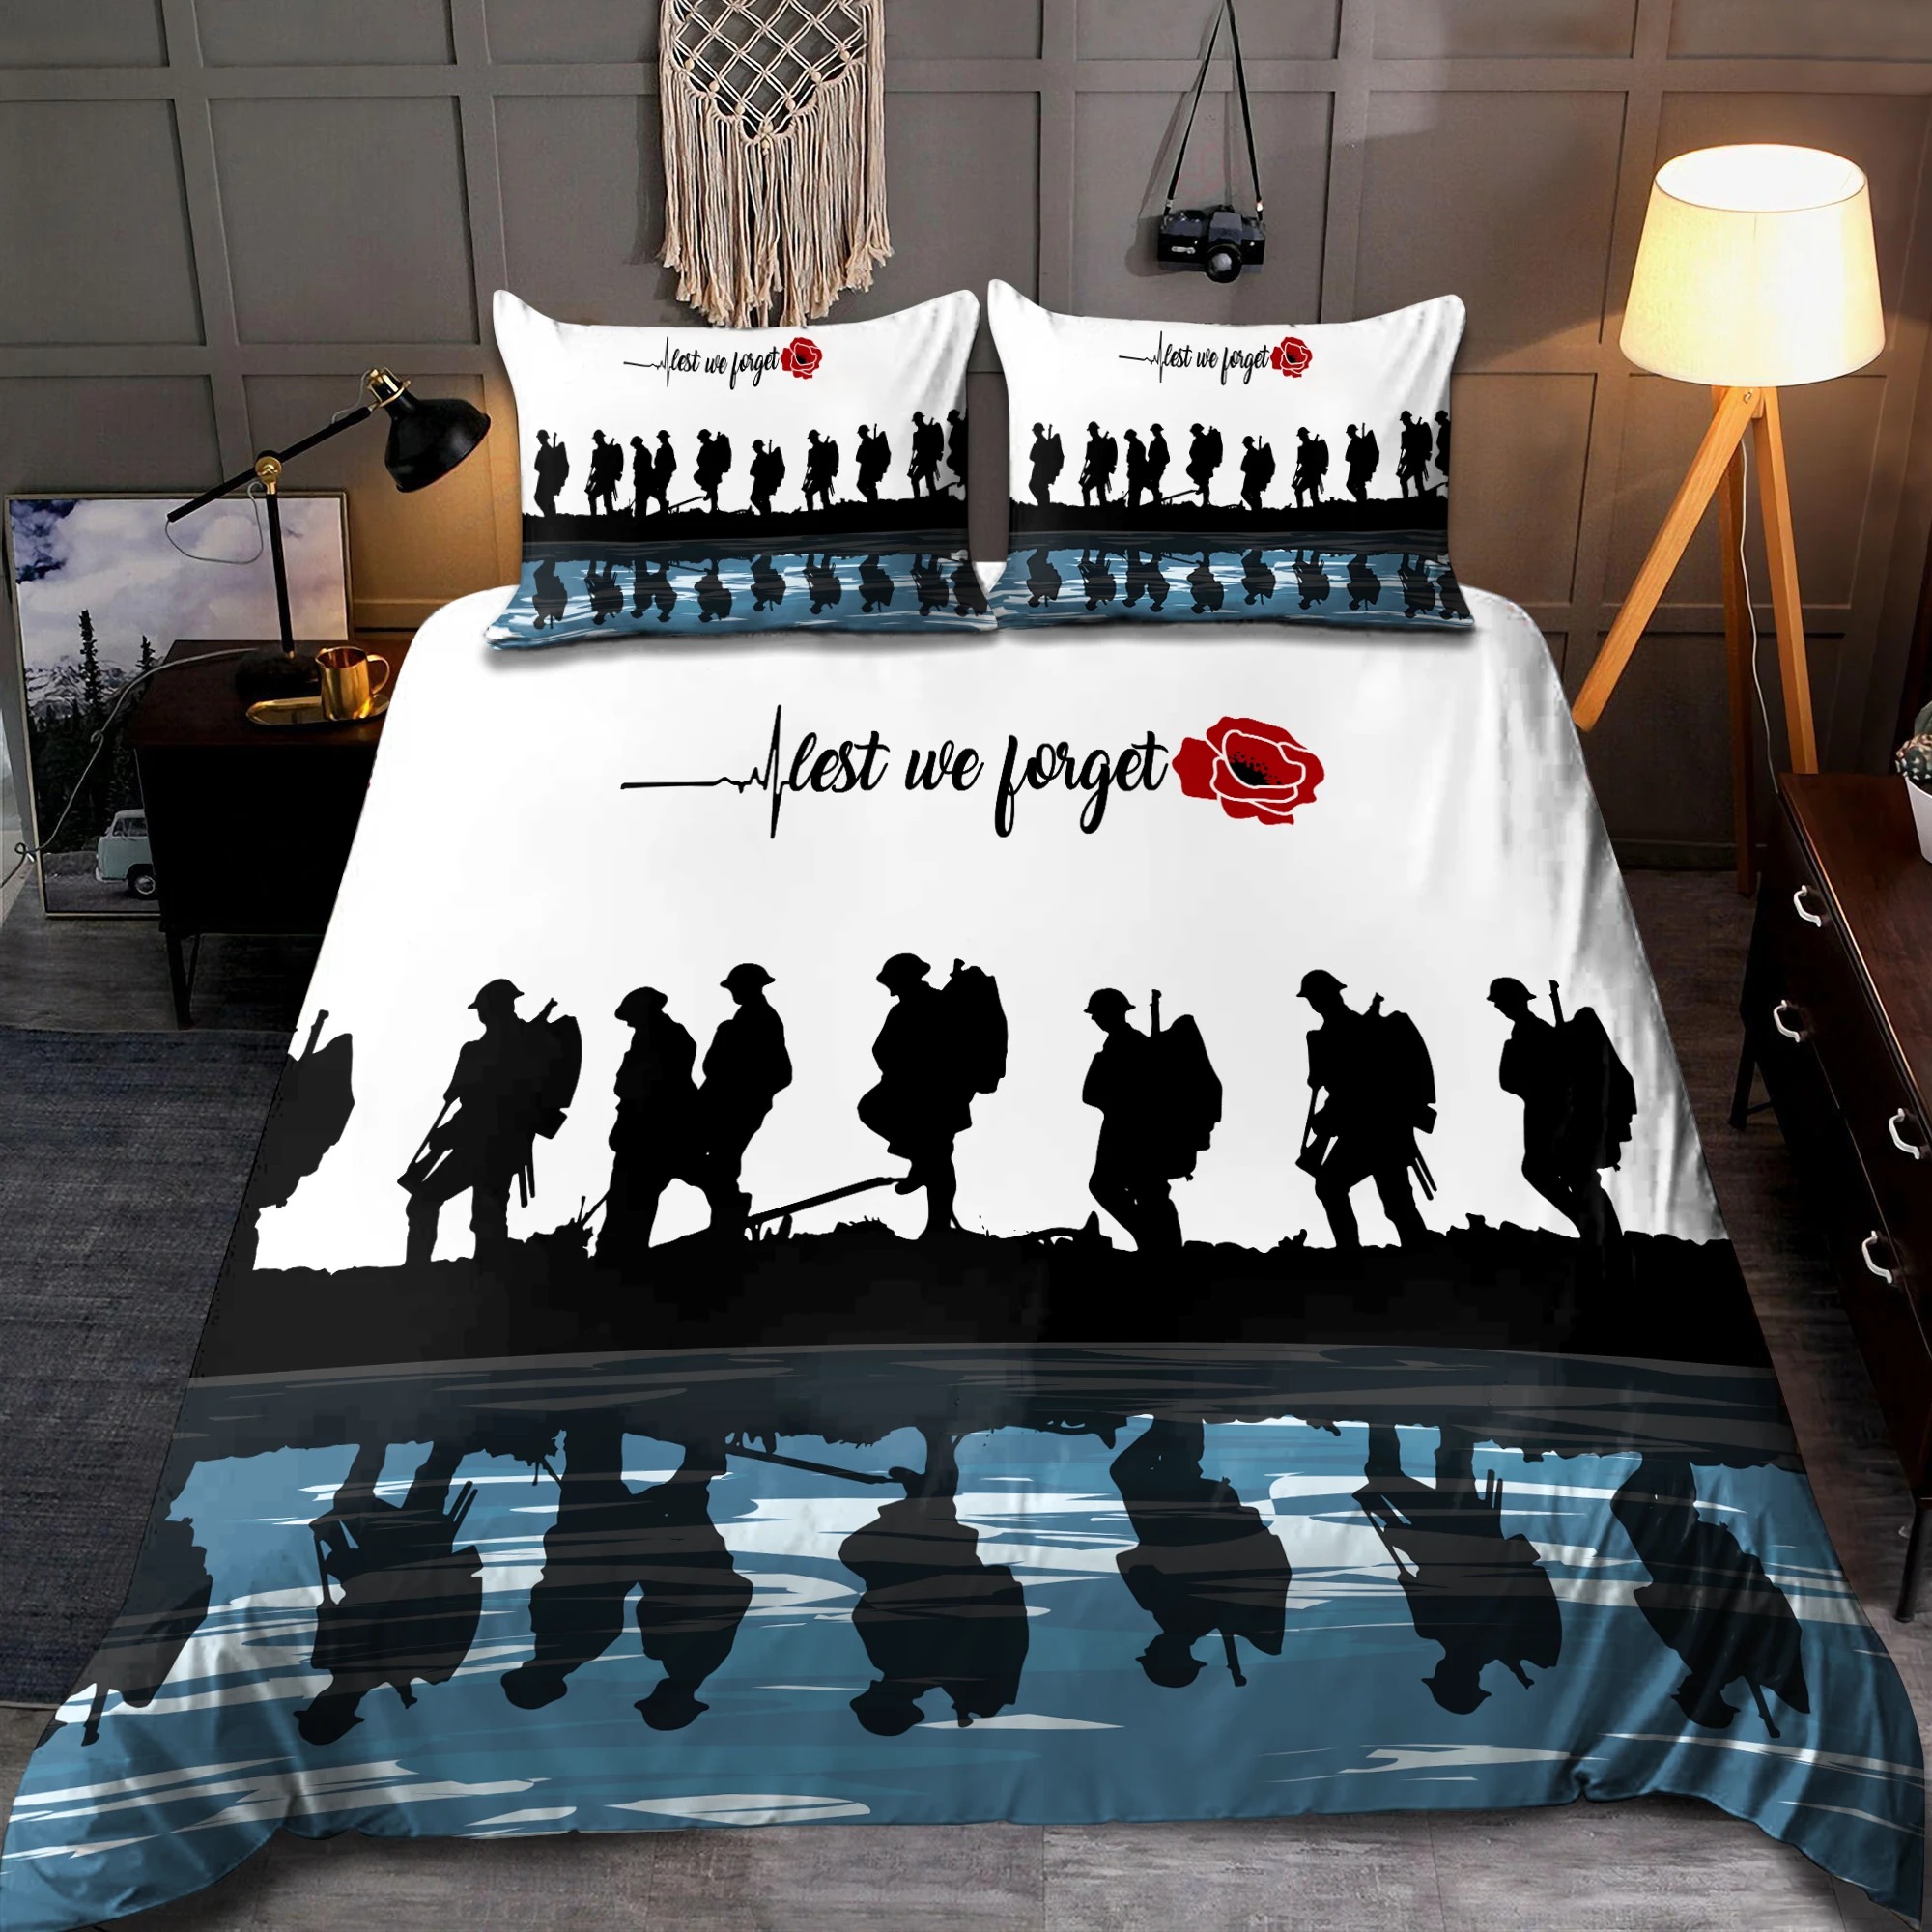 UK Veteran Let we forget honor the fallen bedding set3